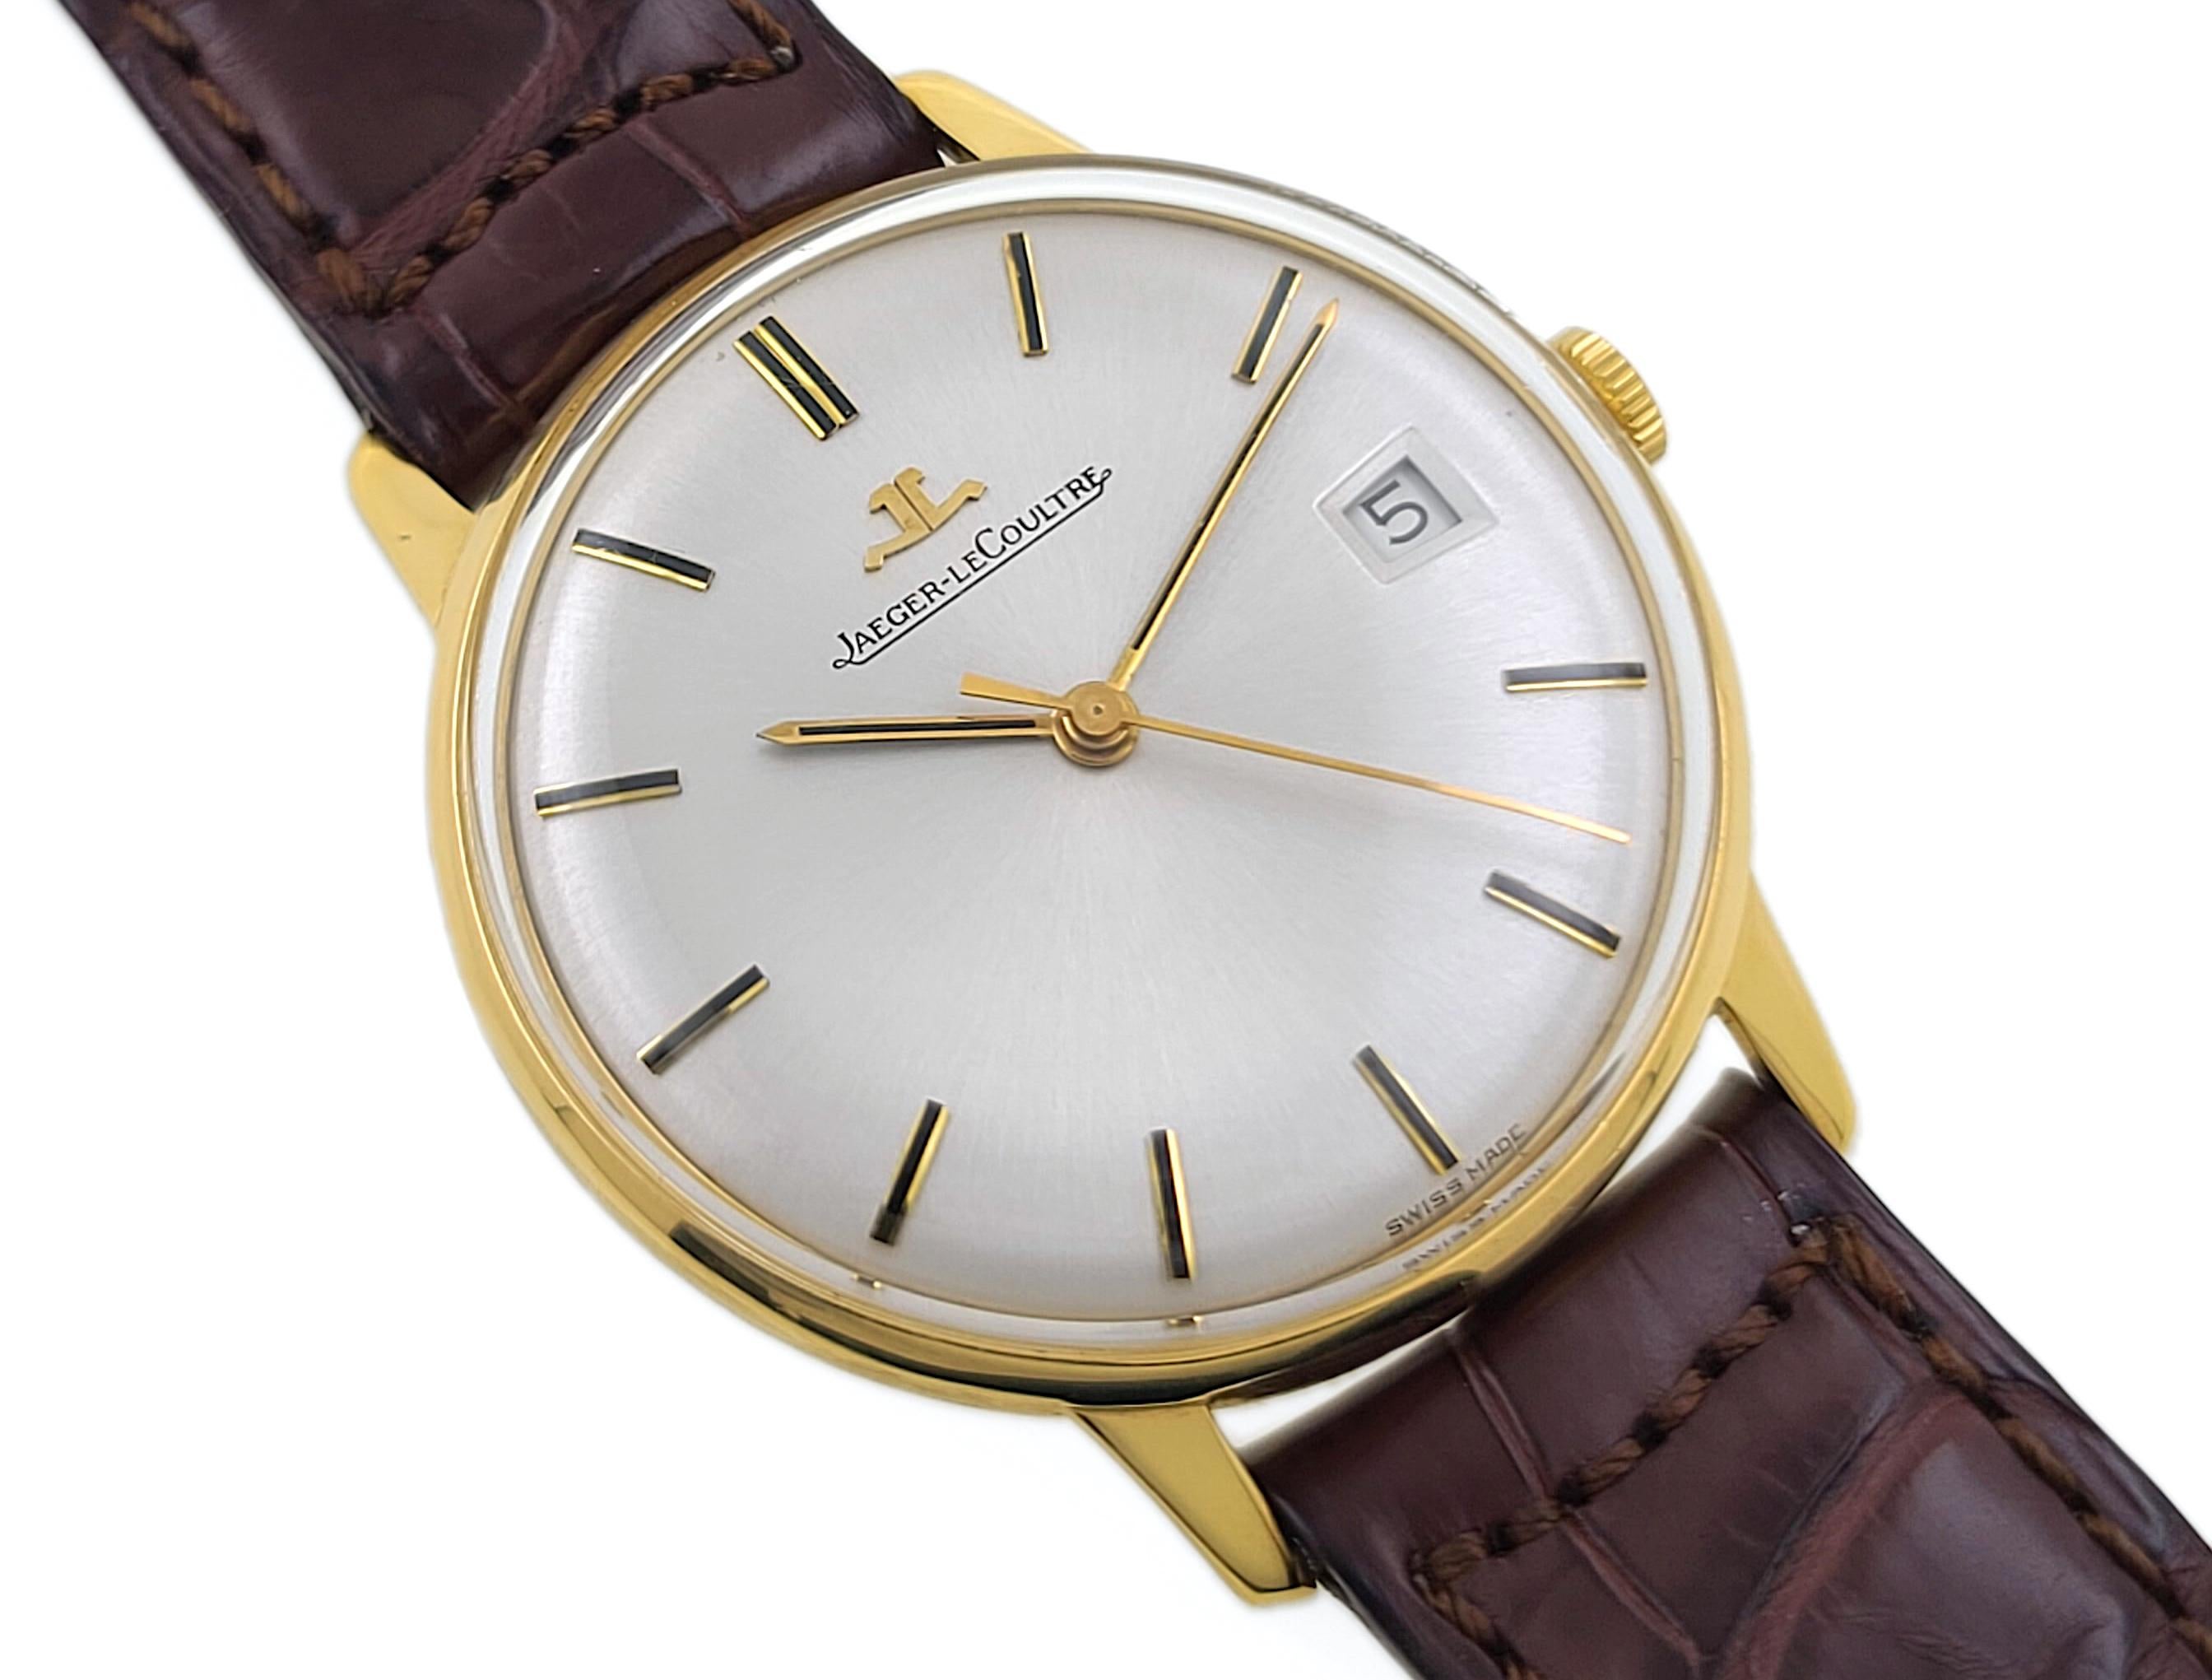 jaeger-lecoultre 18k gold watch